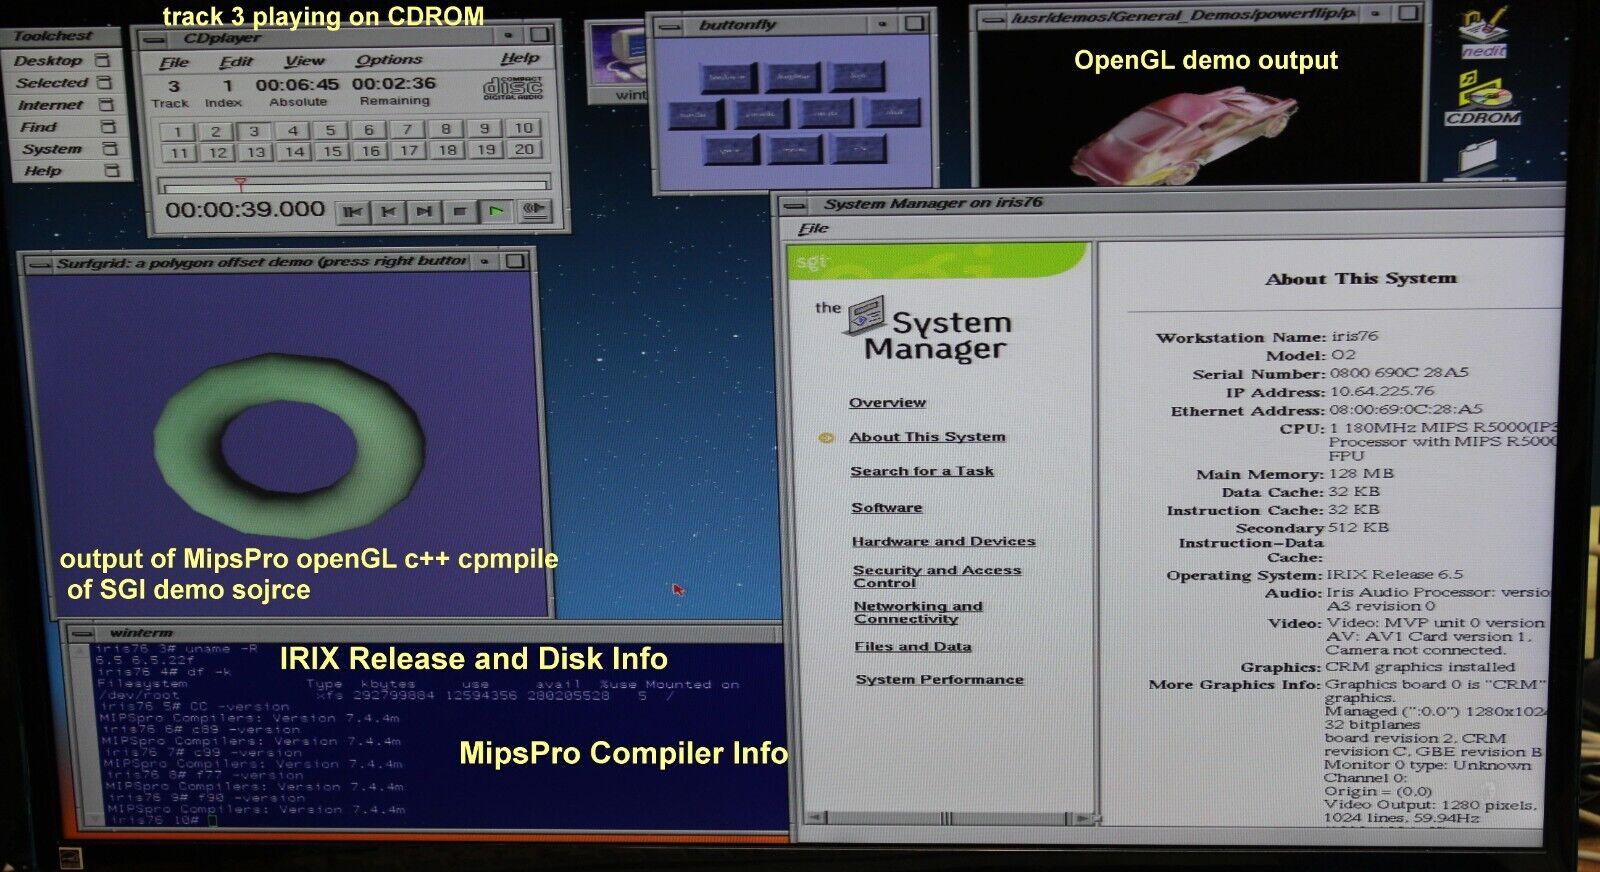 Silicon Graphics Sgi O2 Workstation with MipsPro 7.4.4 Dev